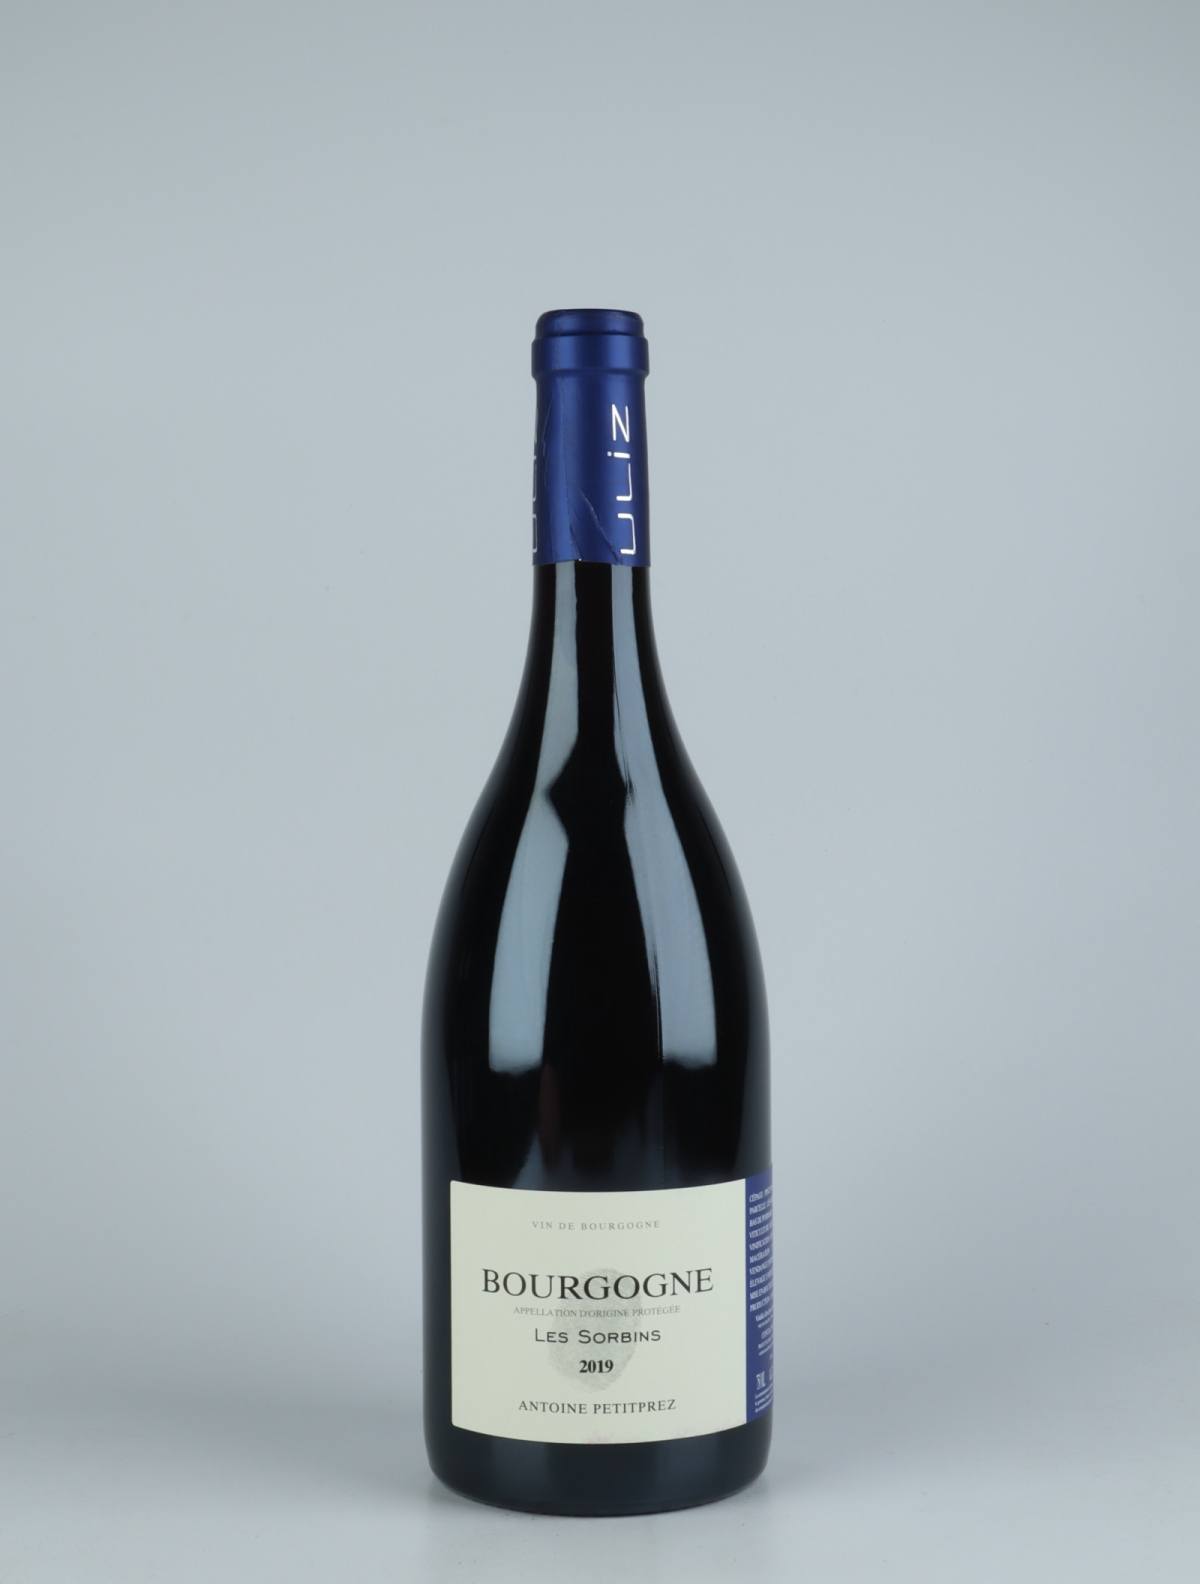 En flaske 2019 Bourgogne Rouge - Les Sorbins Rødvin fra Antoine Petitprez, Bourgogne i Frankrig